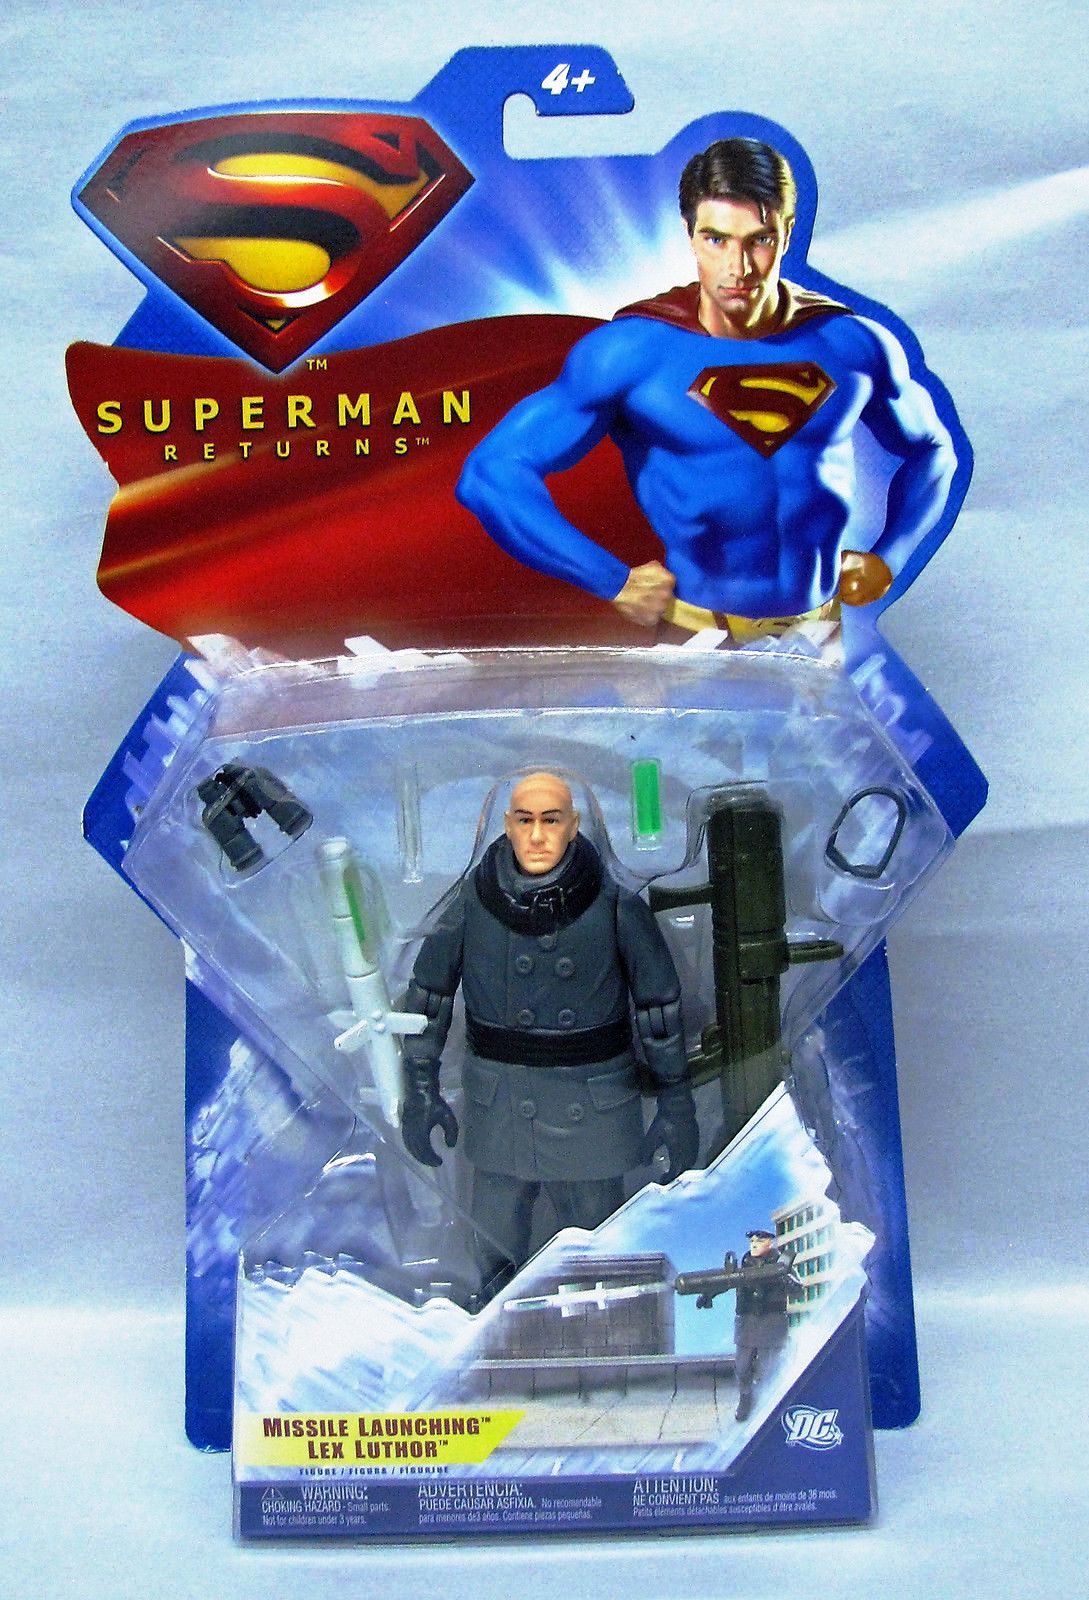 2010 Mattel Superman 12" Lex Luthor Figure Matty Collector for sale online 